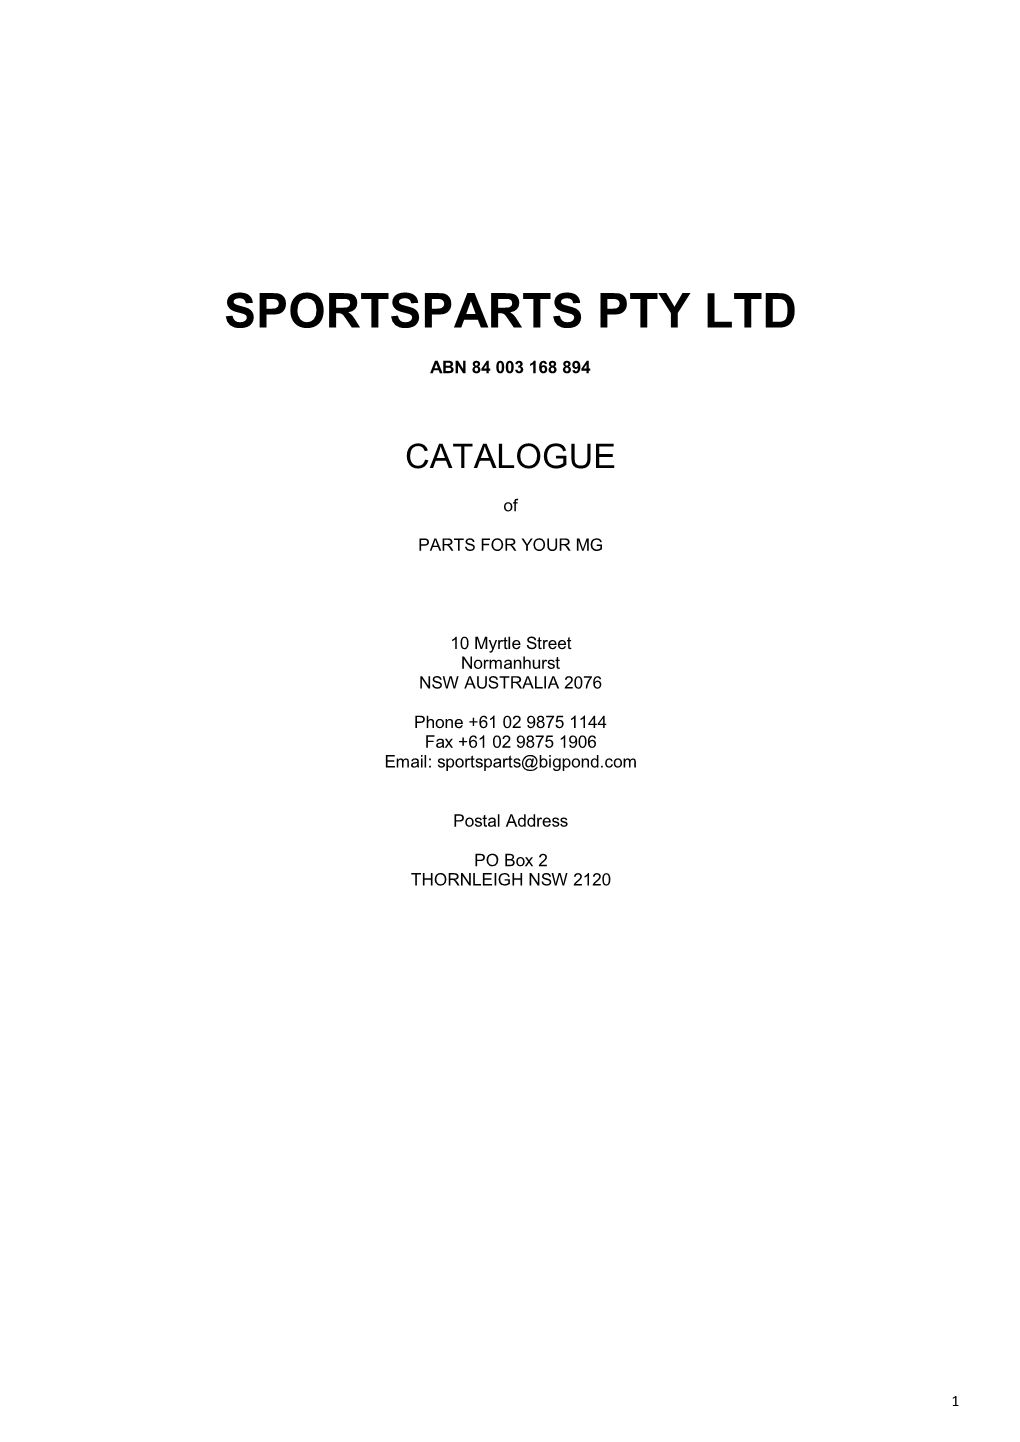 Sportsparts Pty Ltd